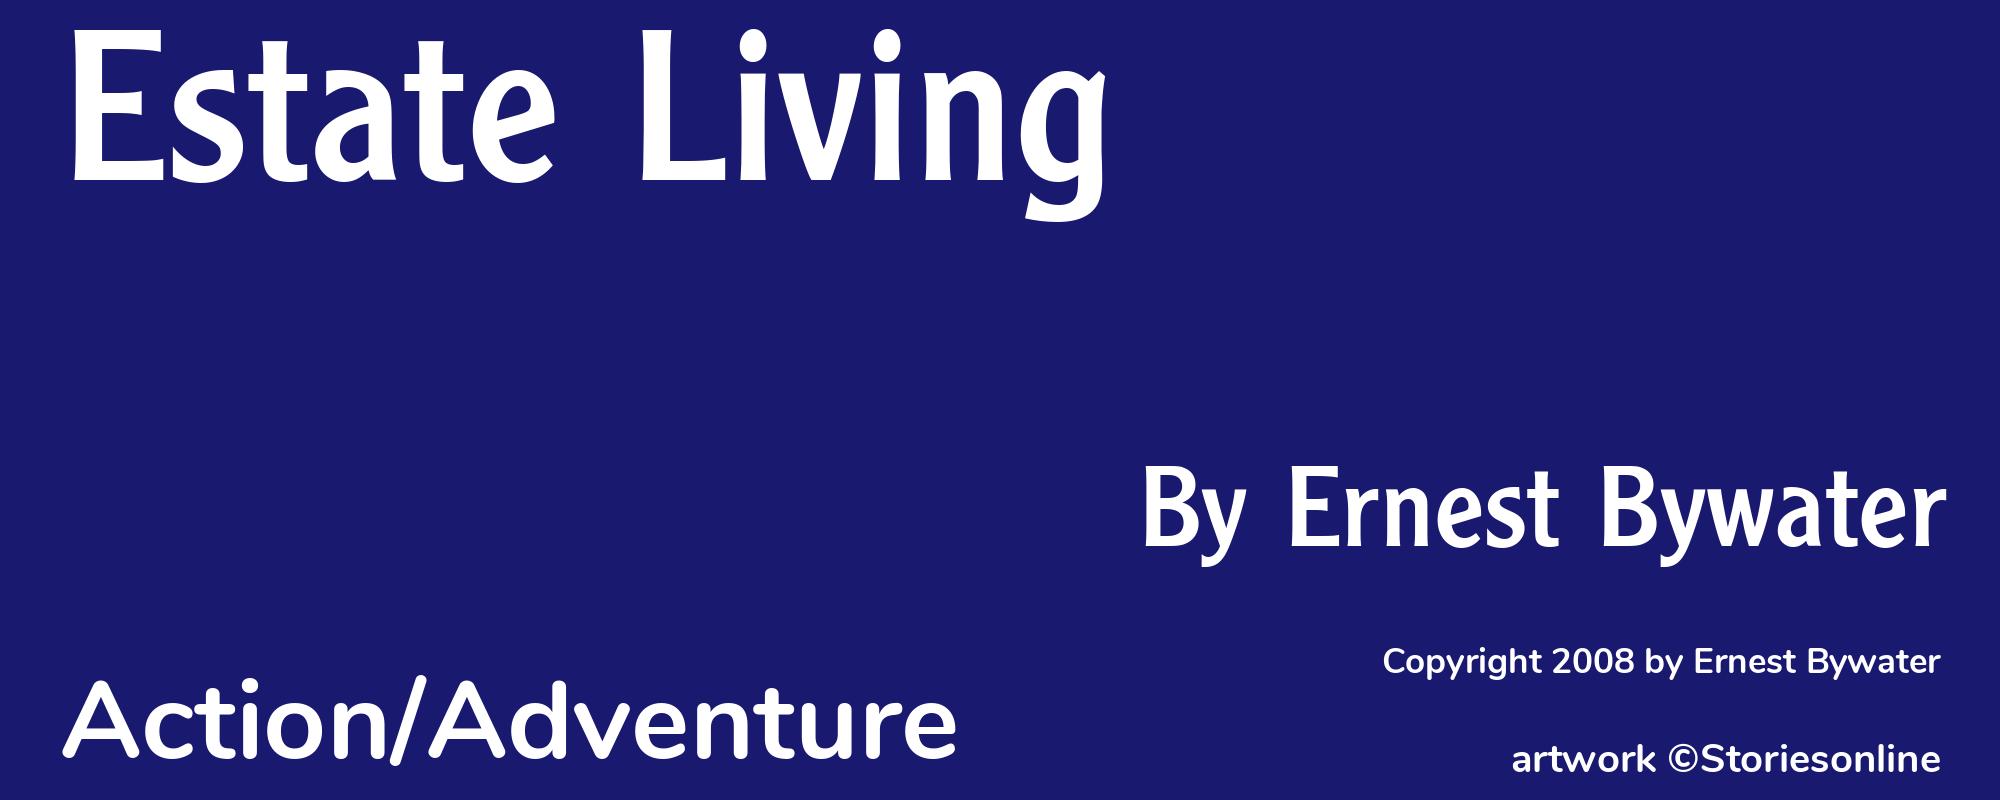 Estate Living - Cover